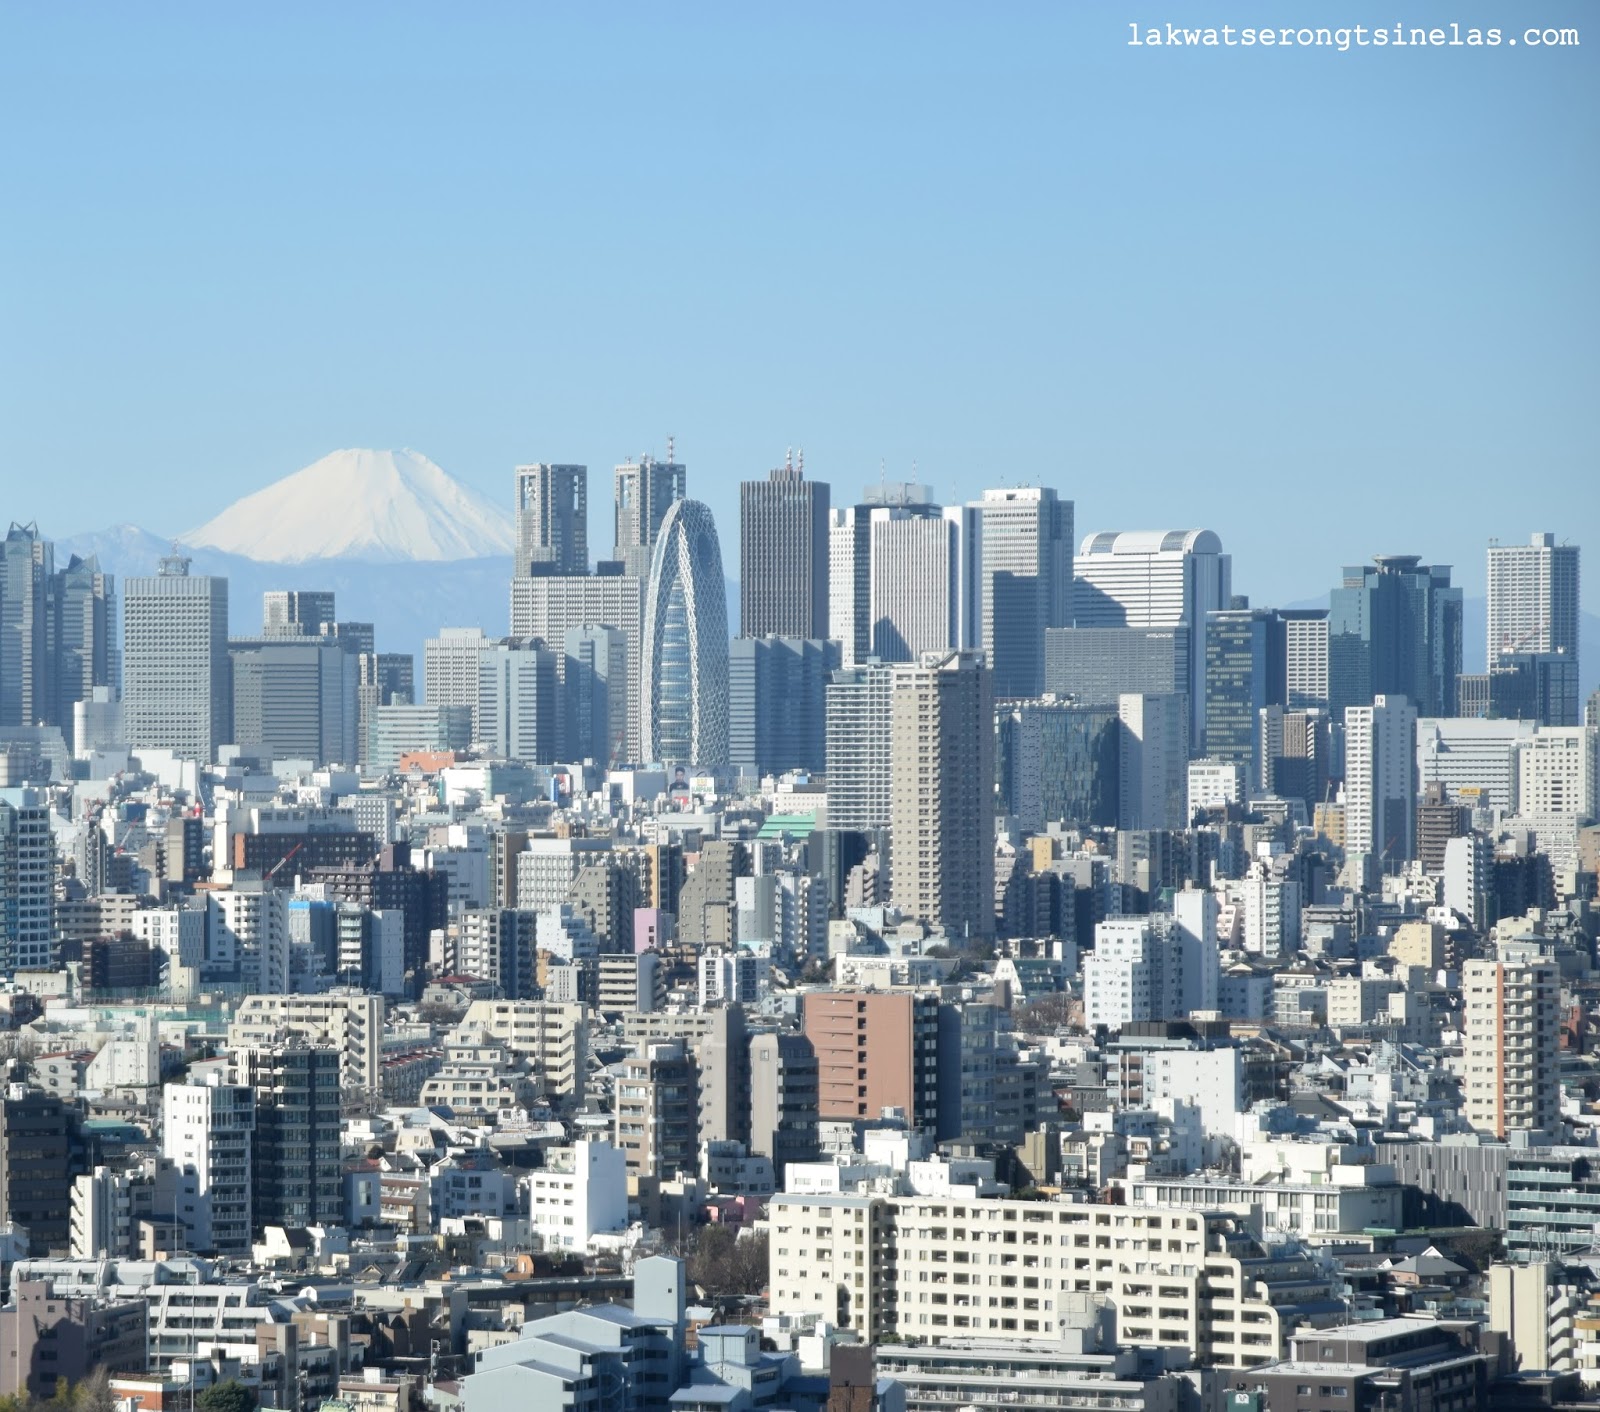 MT. FUJI VANTAGE POINTS THRU THE TOKYO METRO SUBWAY